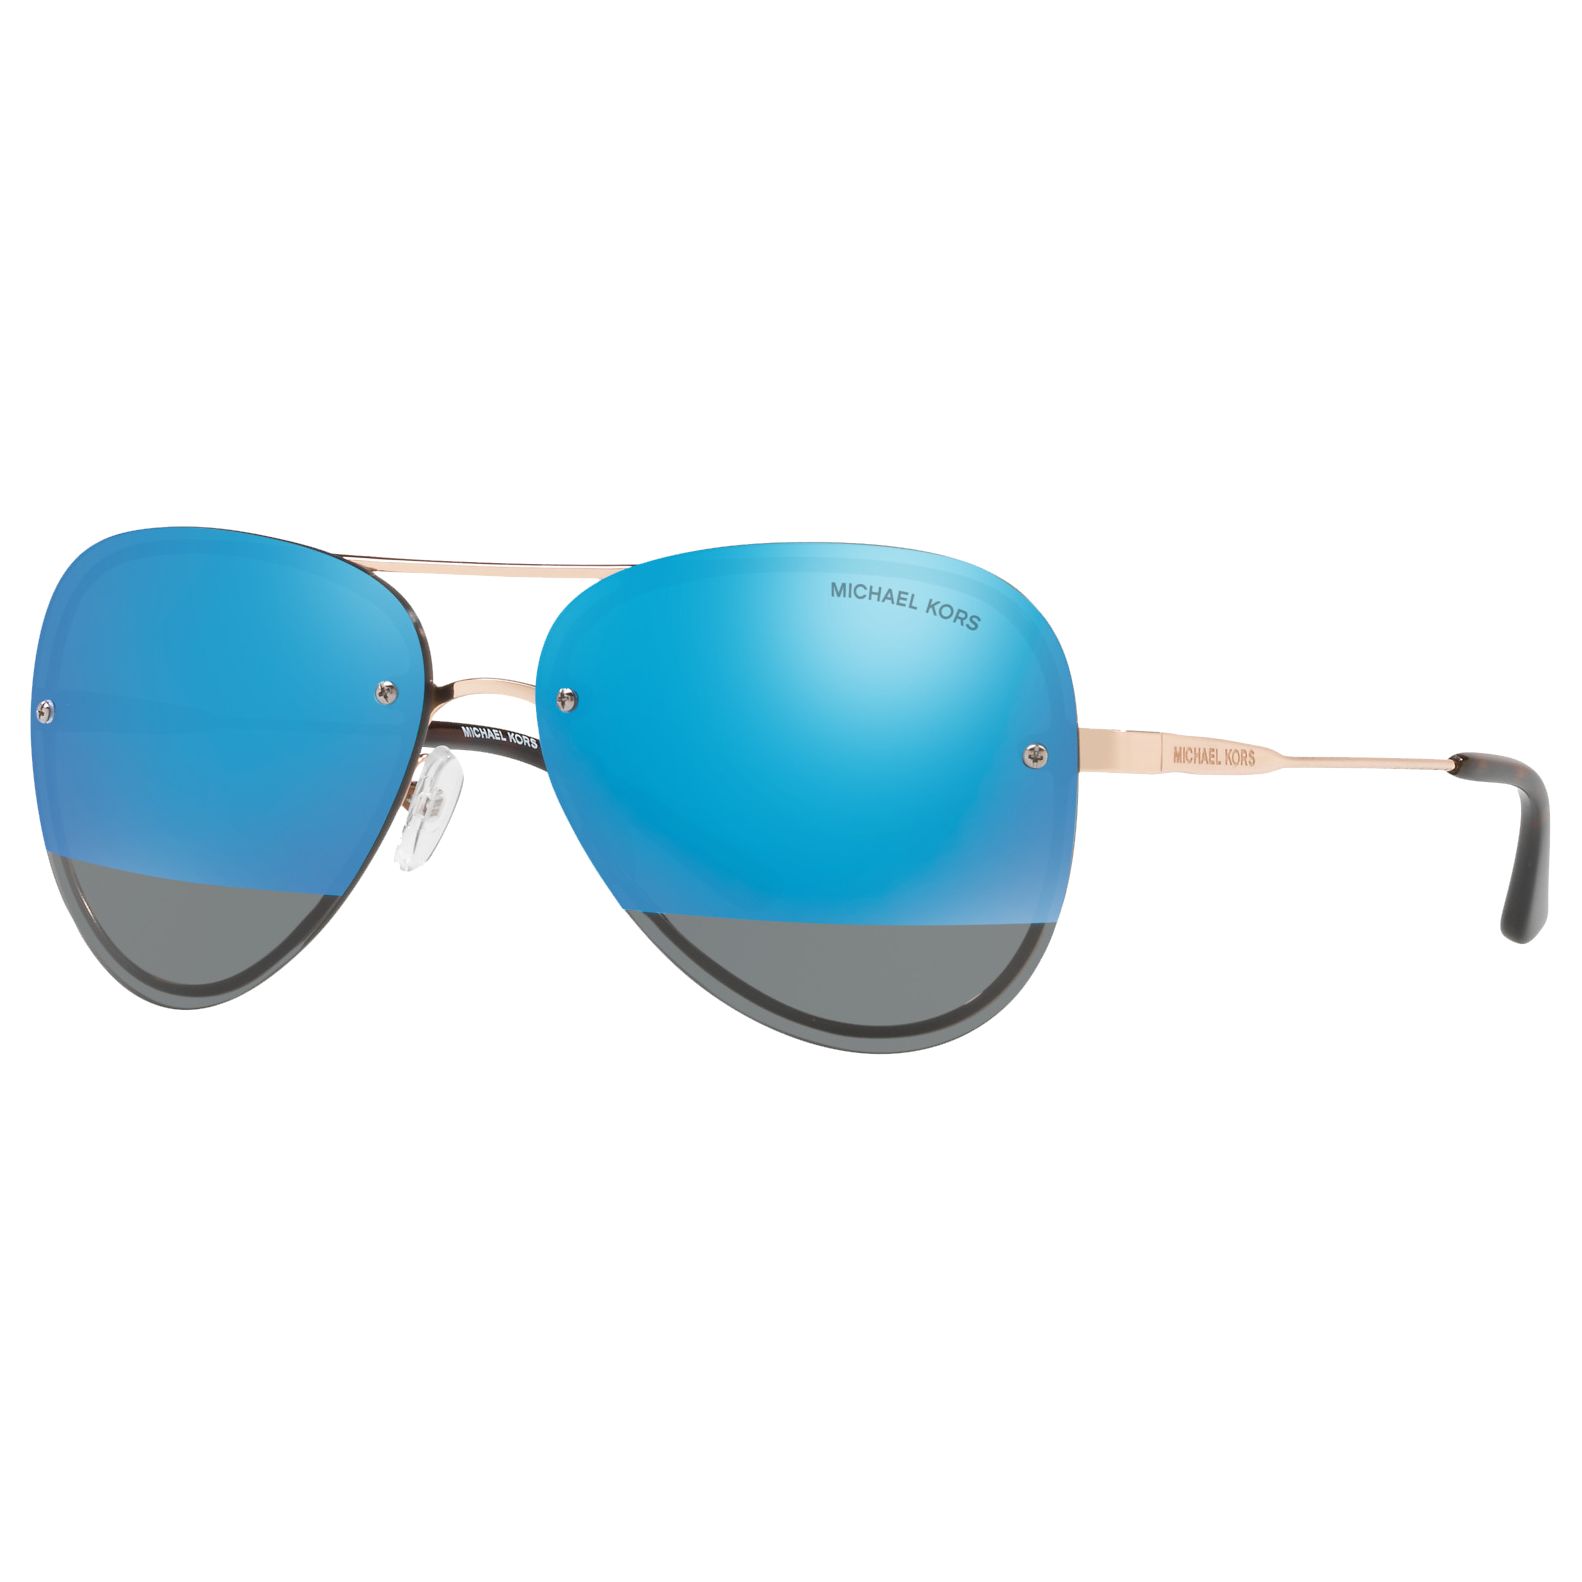 michael kors sunglasses blue mirror